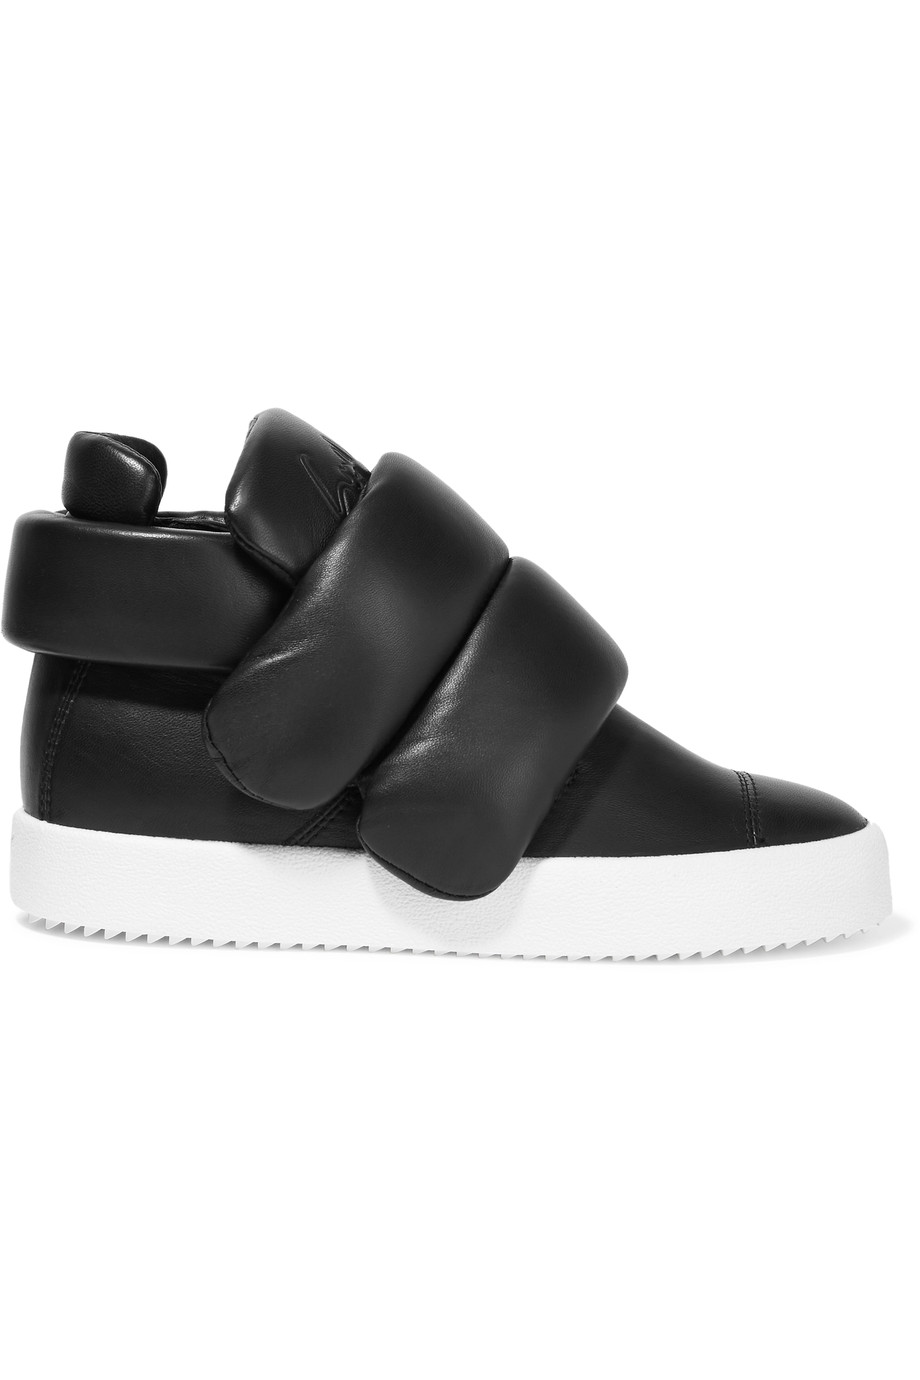 Giuseppe Zanotti Leather Sneakers | ModeSens